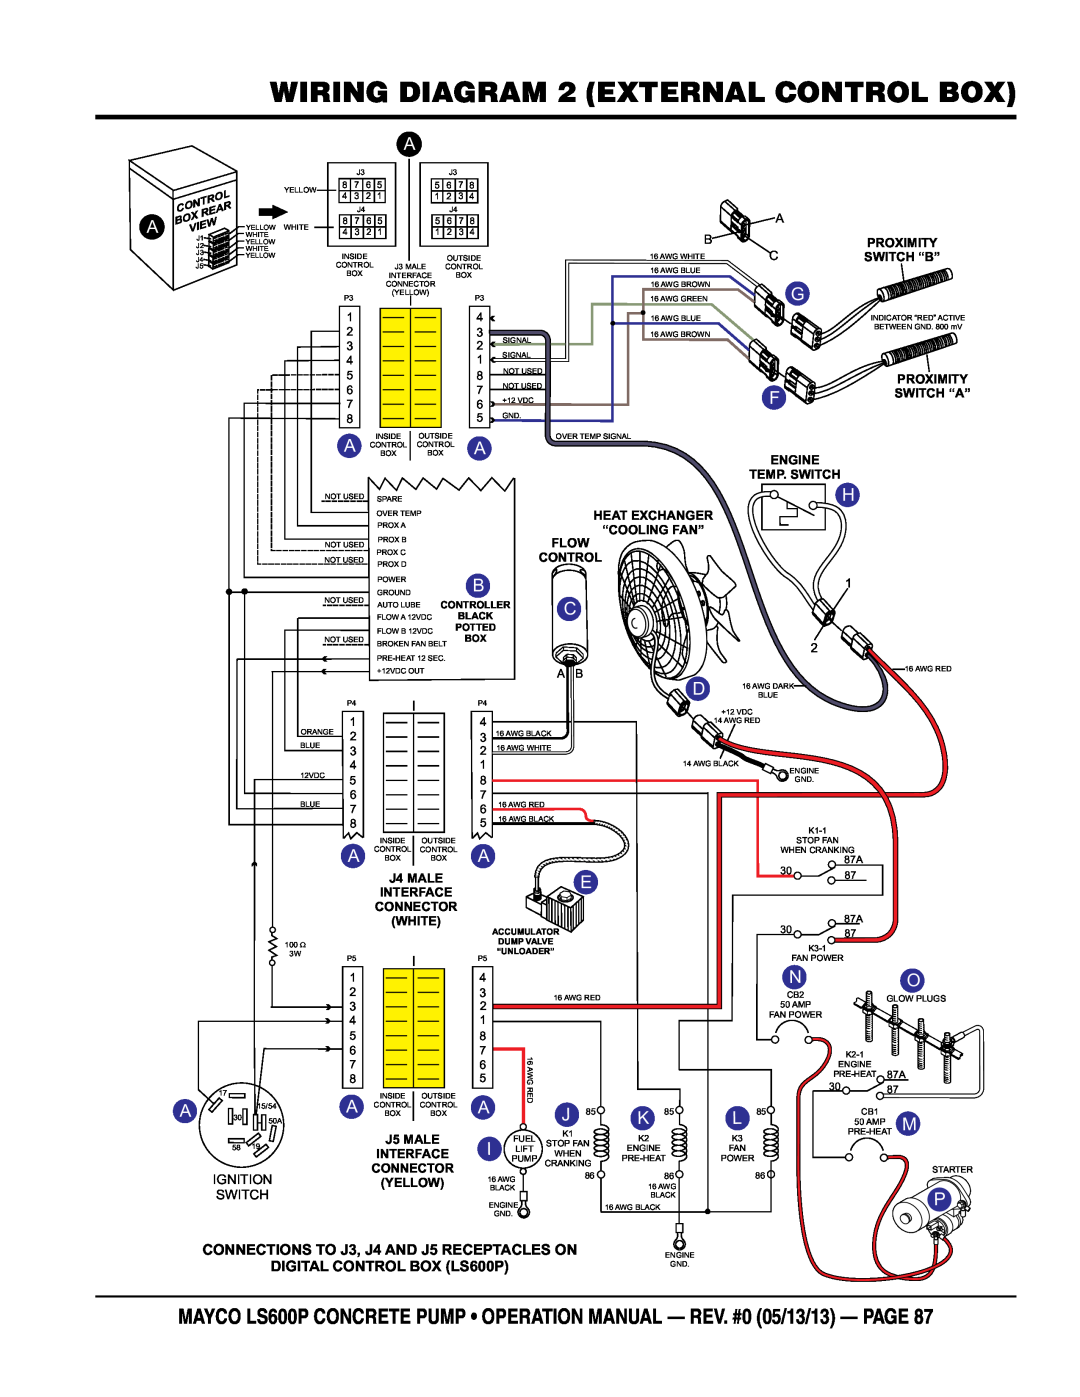 Multiquip LS600P operation manual wiring diagram 2 EXTERNAL control box 